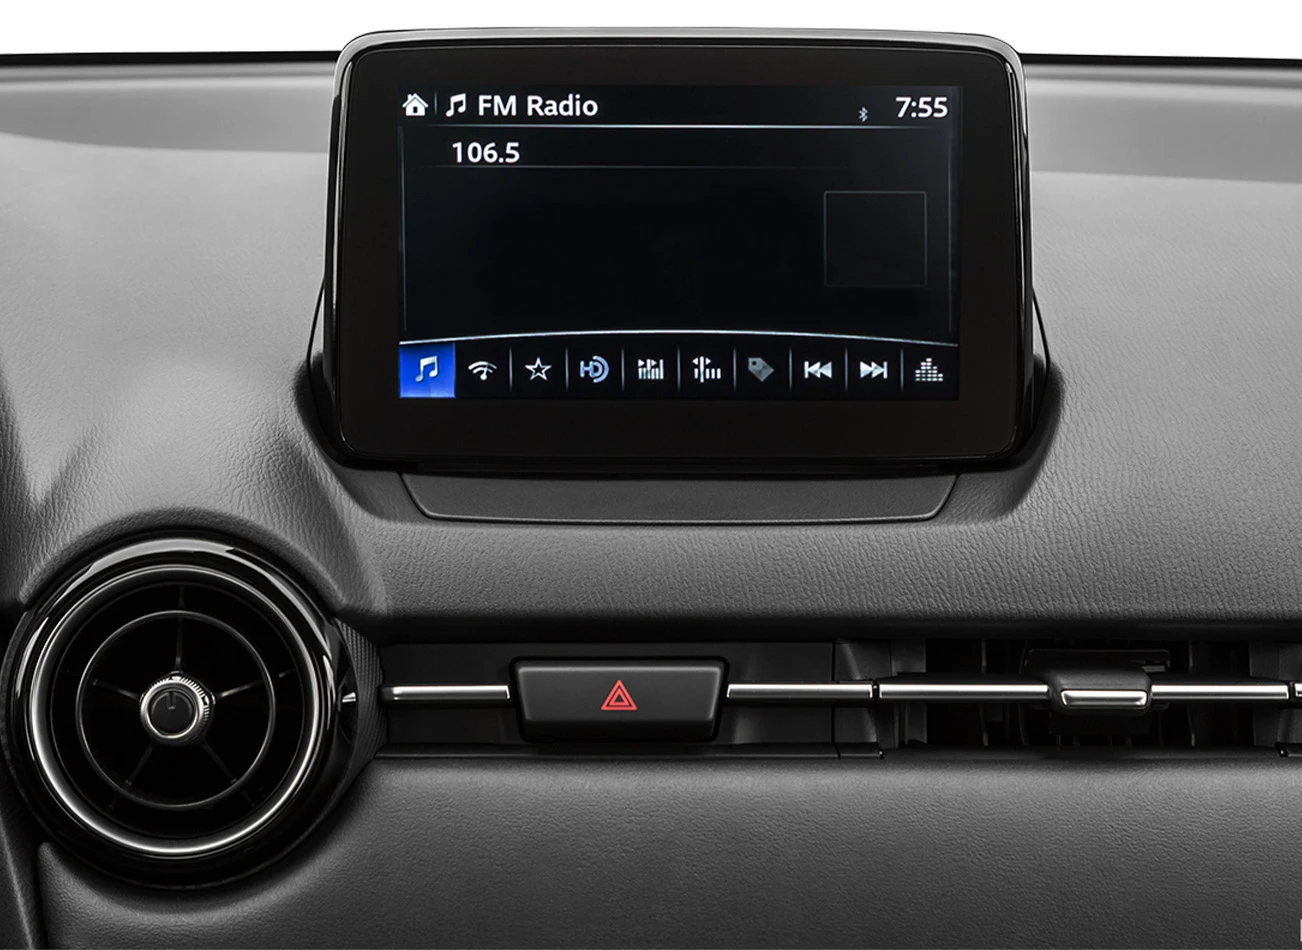 2020 Toyota Yaris: Infotainment system | CarMax